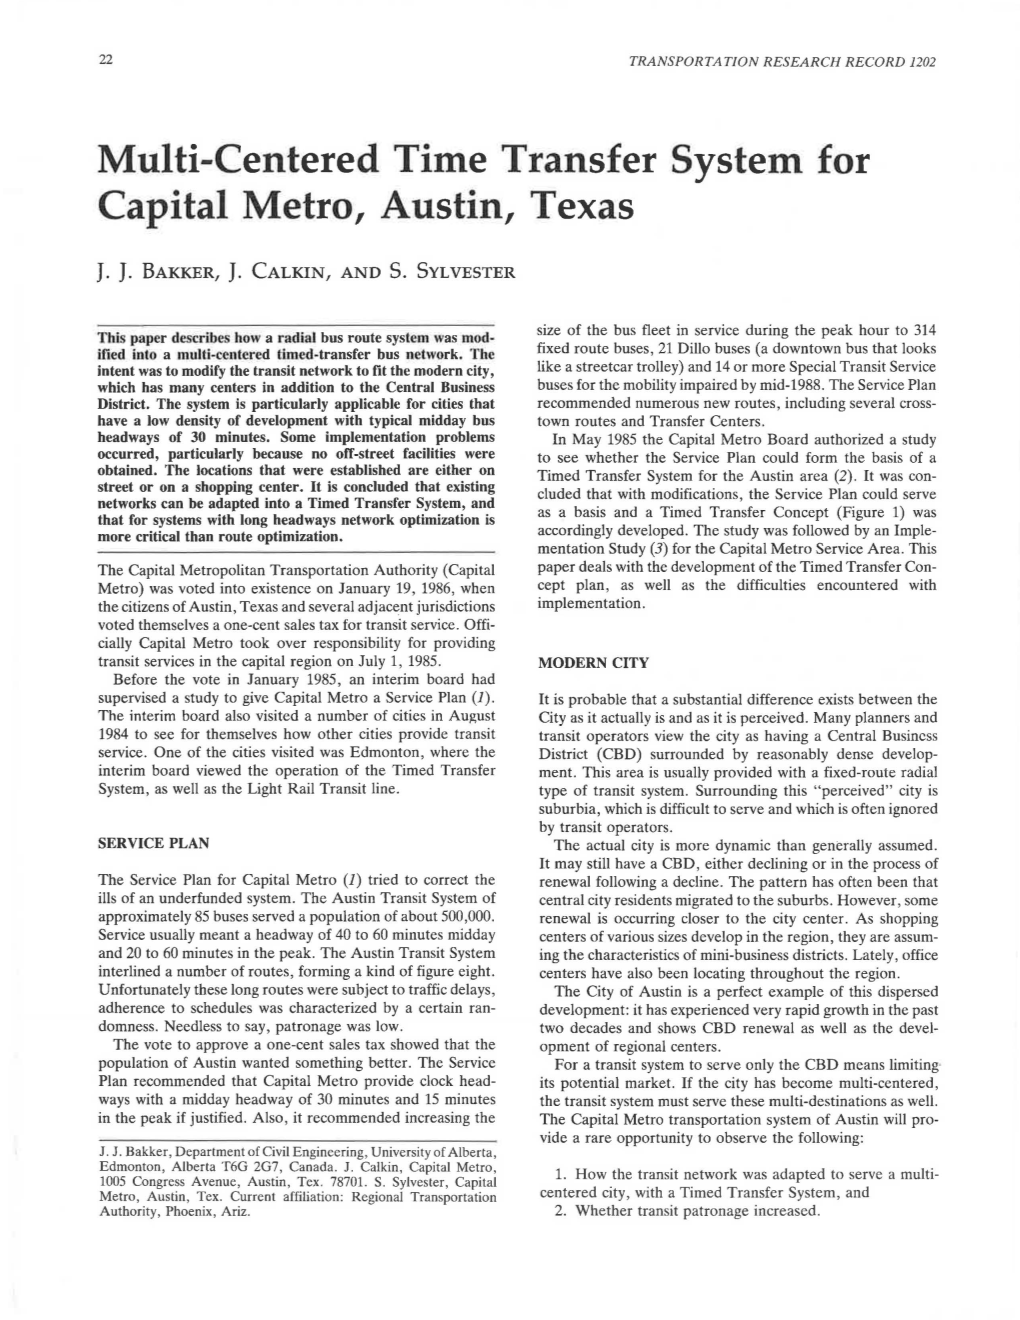 Multi-Centered Time Transfer System for Capital Metro, Austin, Texas